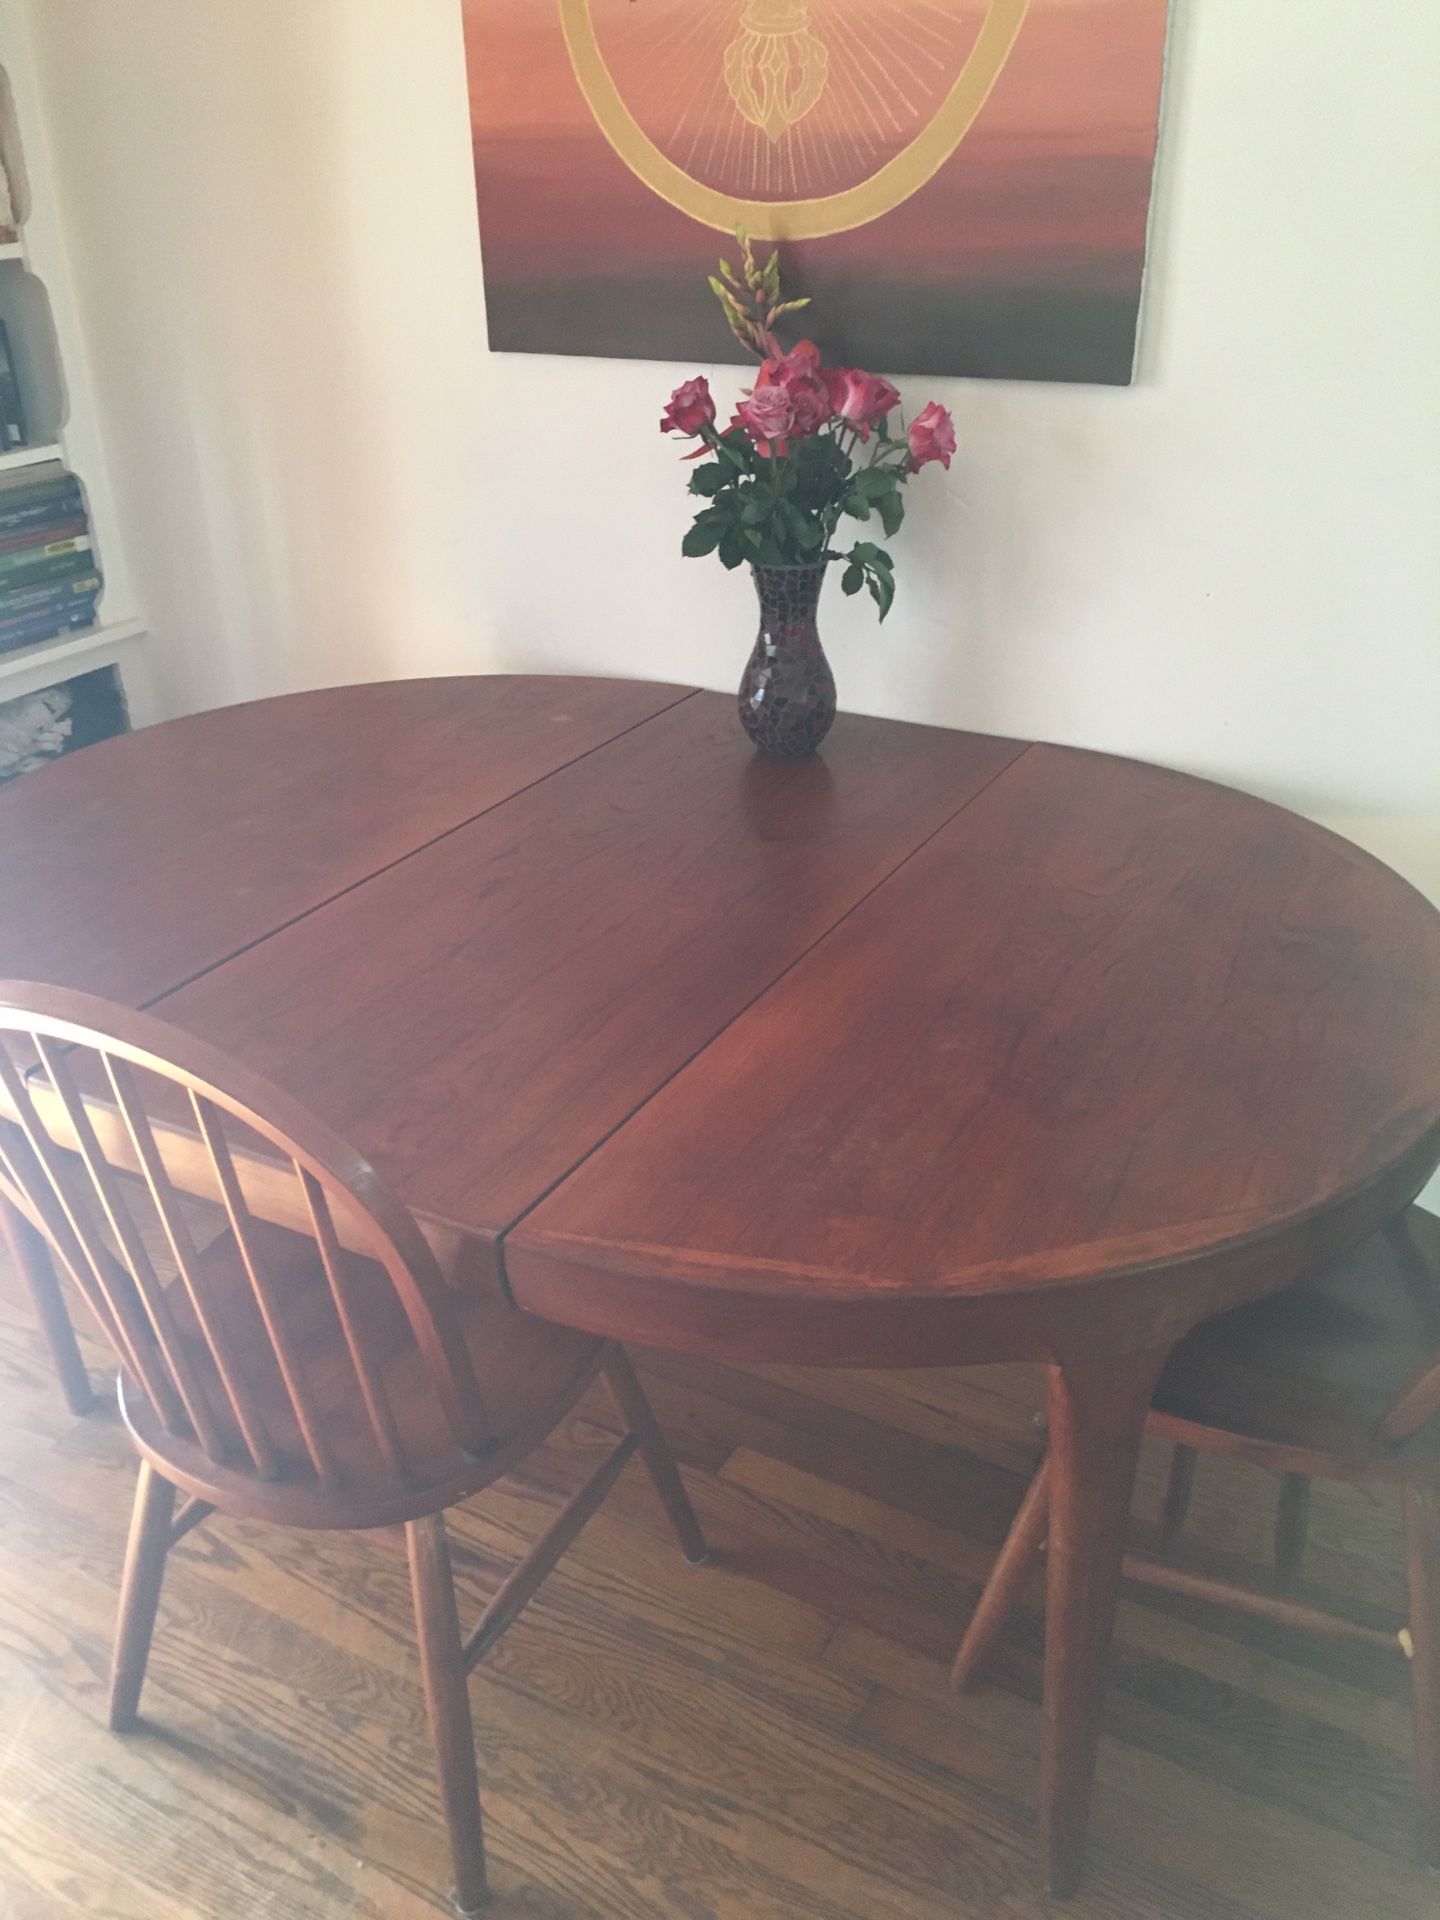 Cherry wood kitchen table